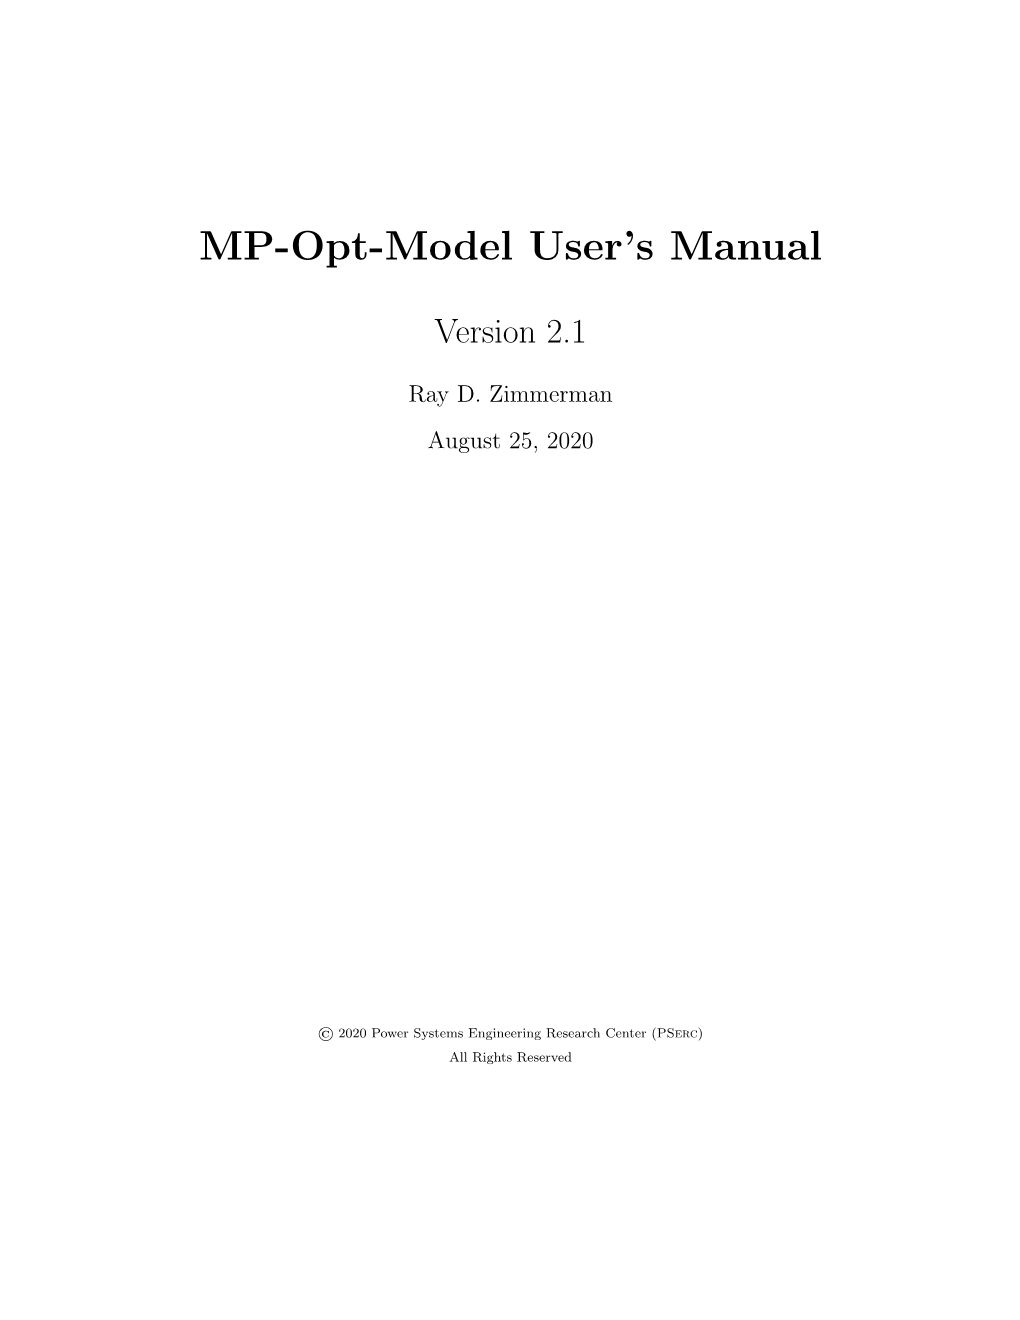 MP-Opt-Model User's Manual, Version